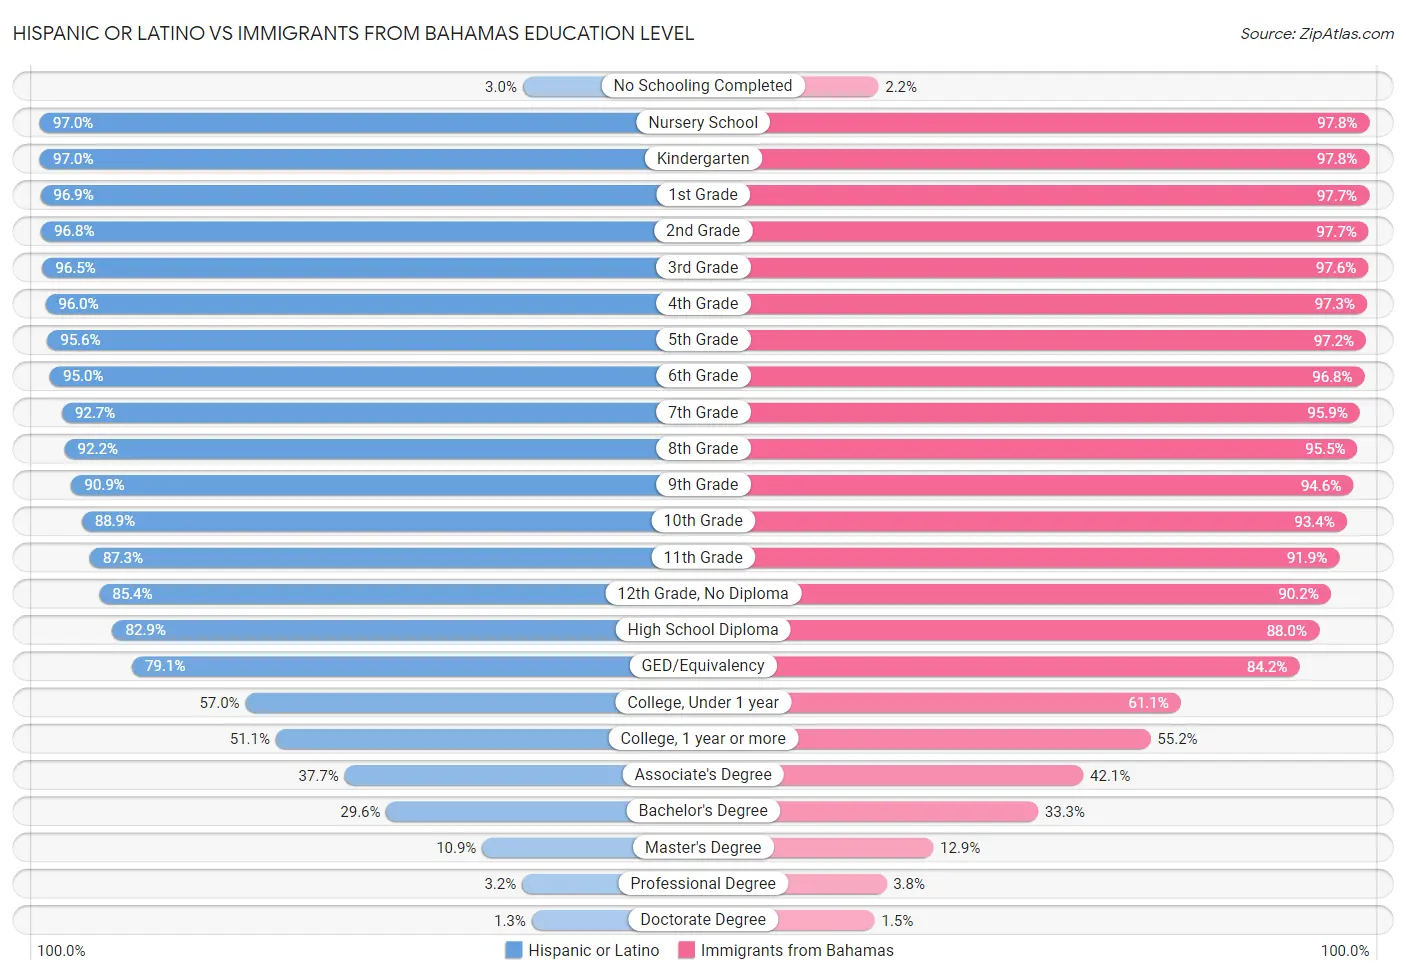 Hispanic or Latino vs Immigrants from Bahamas Education Level